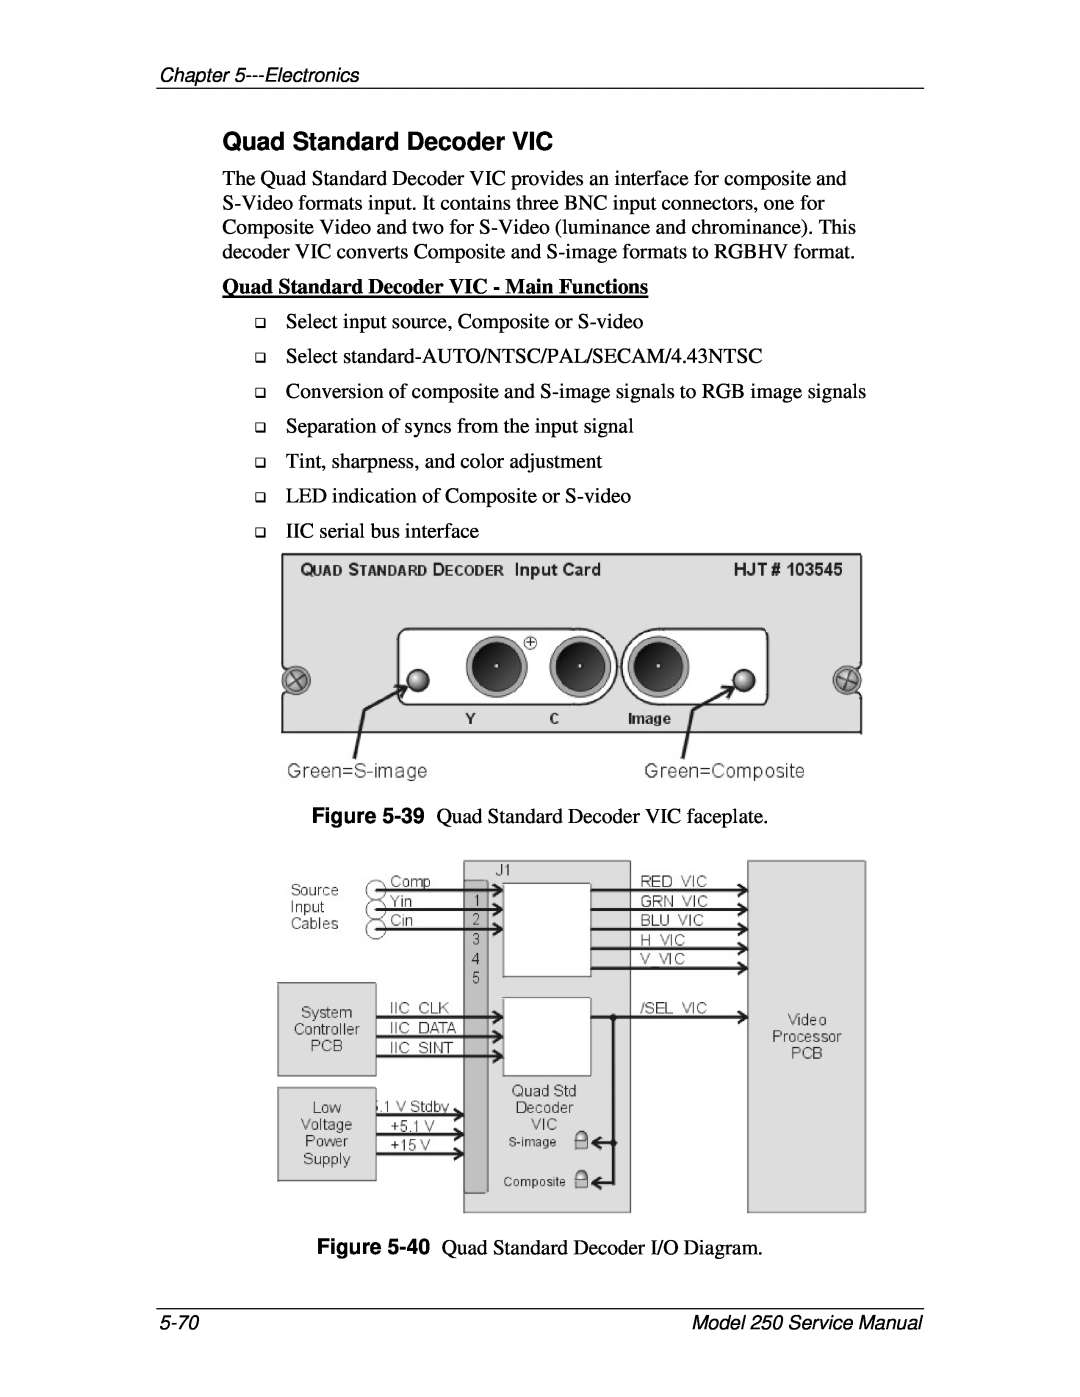 JVC 250 service manual Quad Standard Decoder VIC - Main Functions 